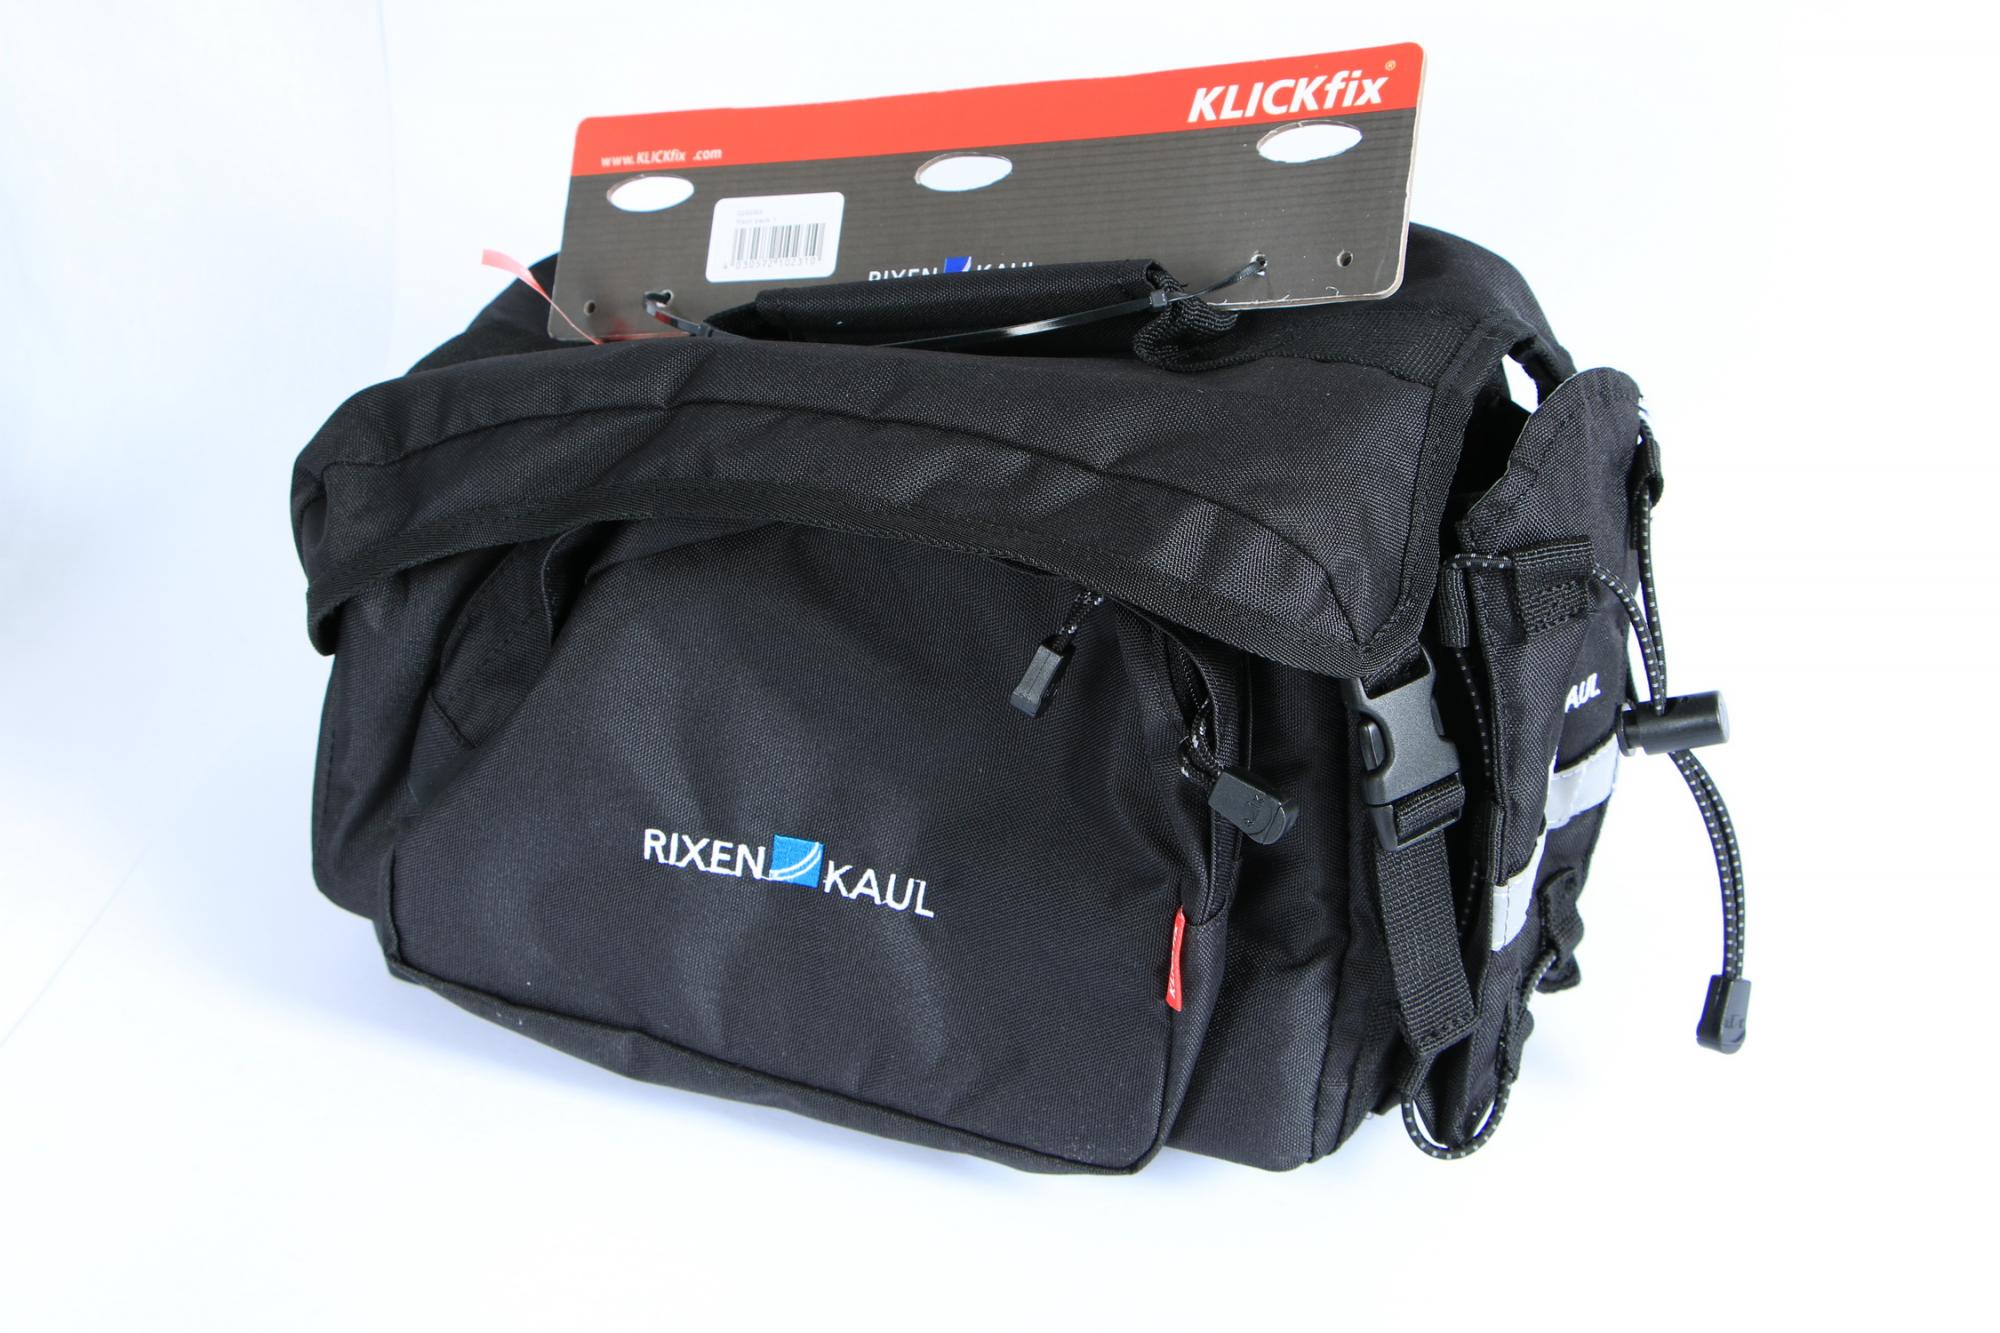 Rixen Kaul Klickfix Rackpack 1 Fahrradtasche Tasche für Racktime Gepäckträger